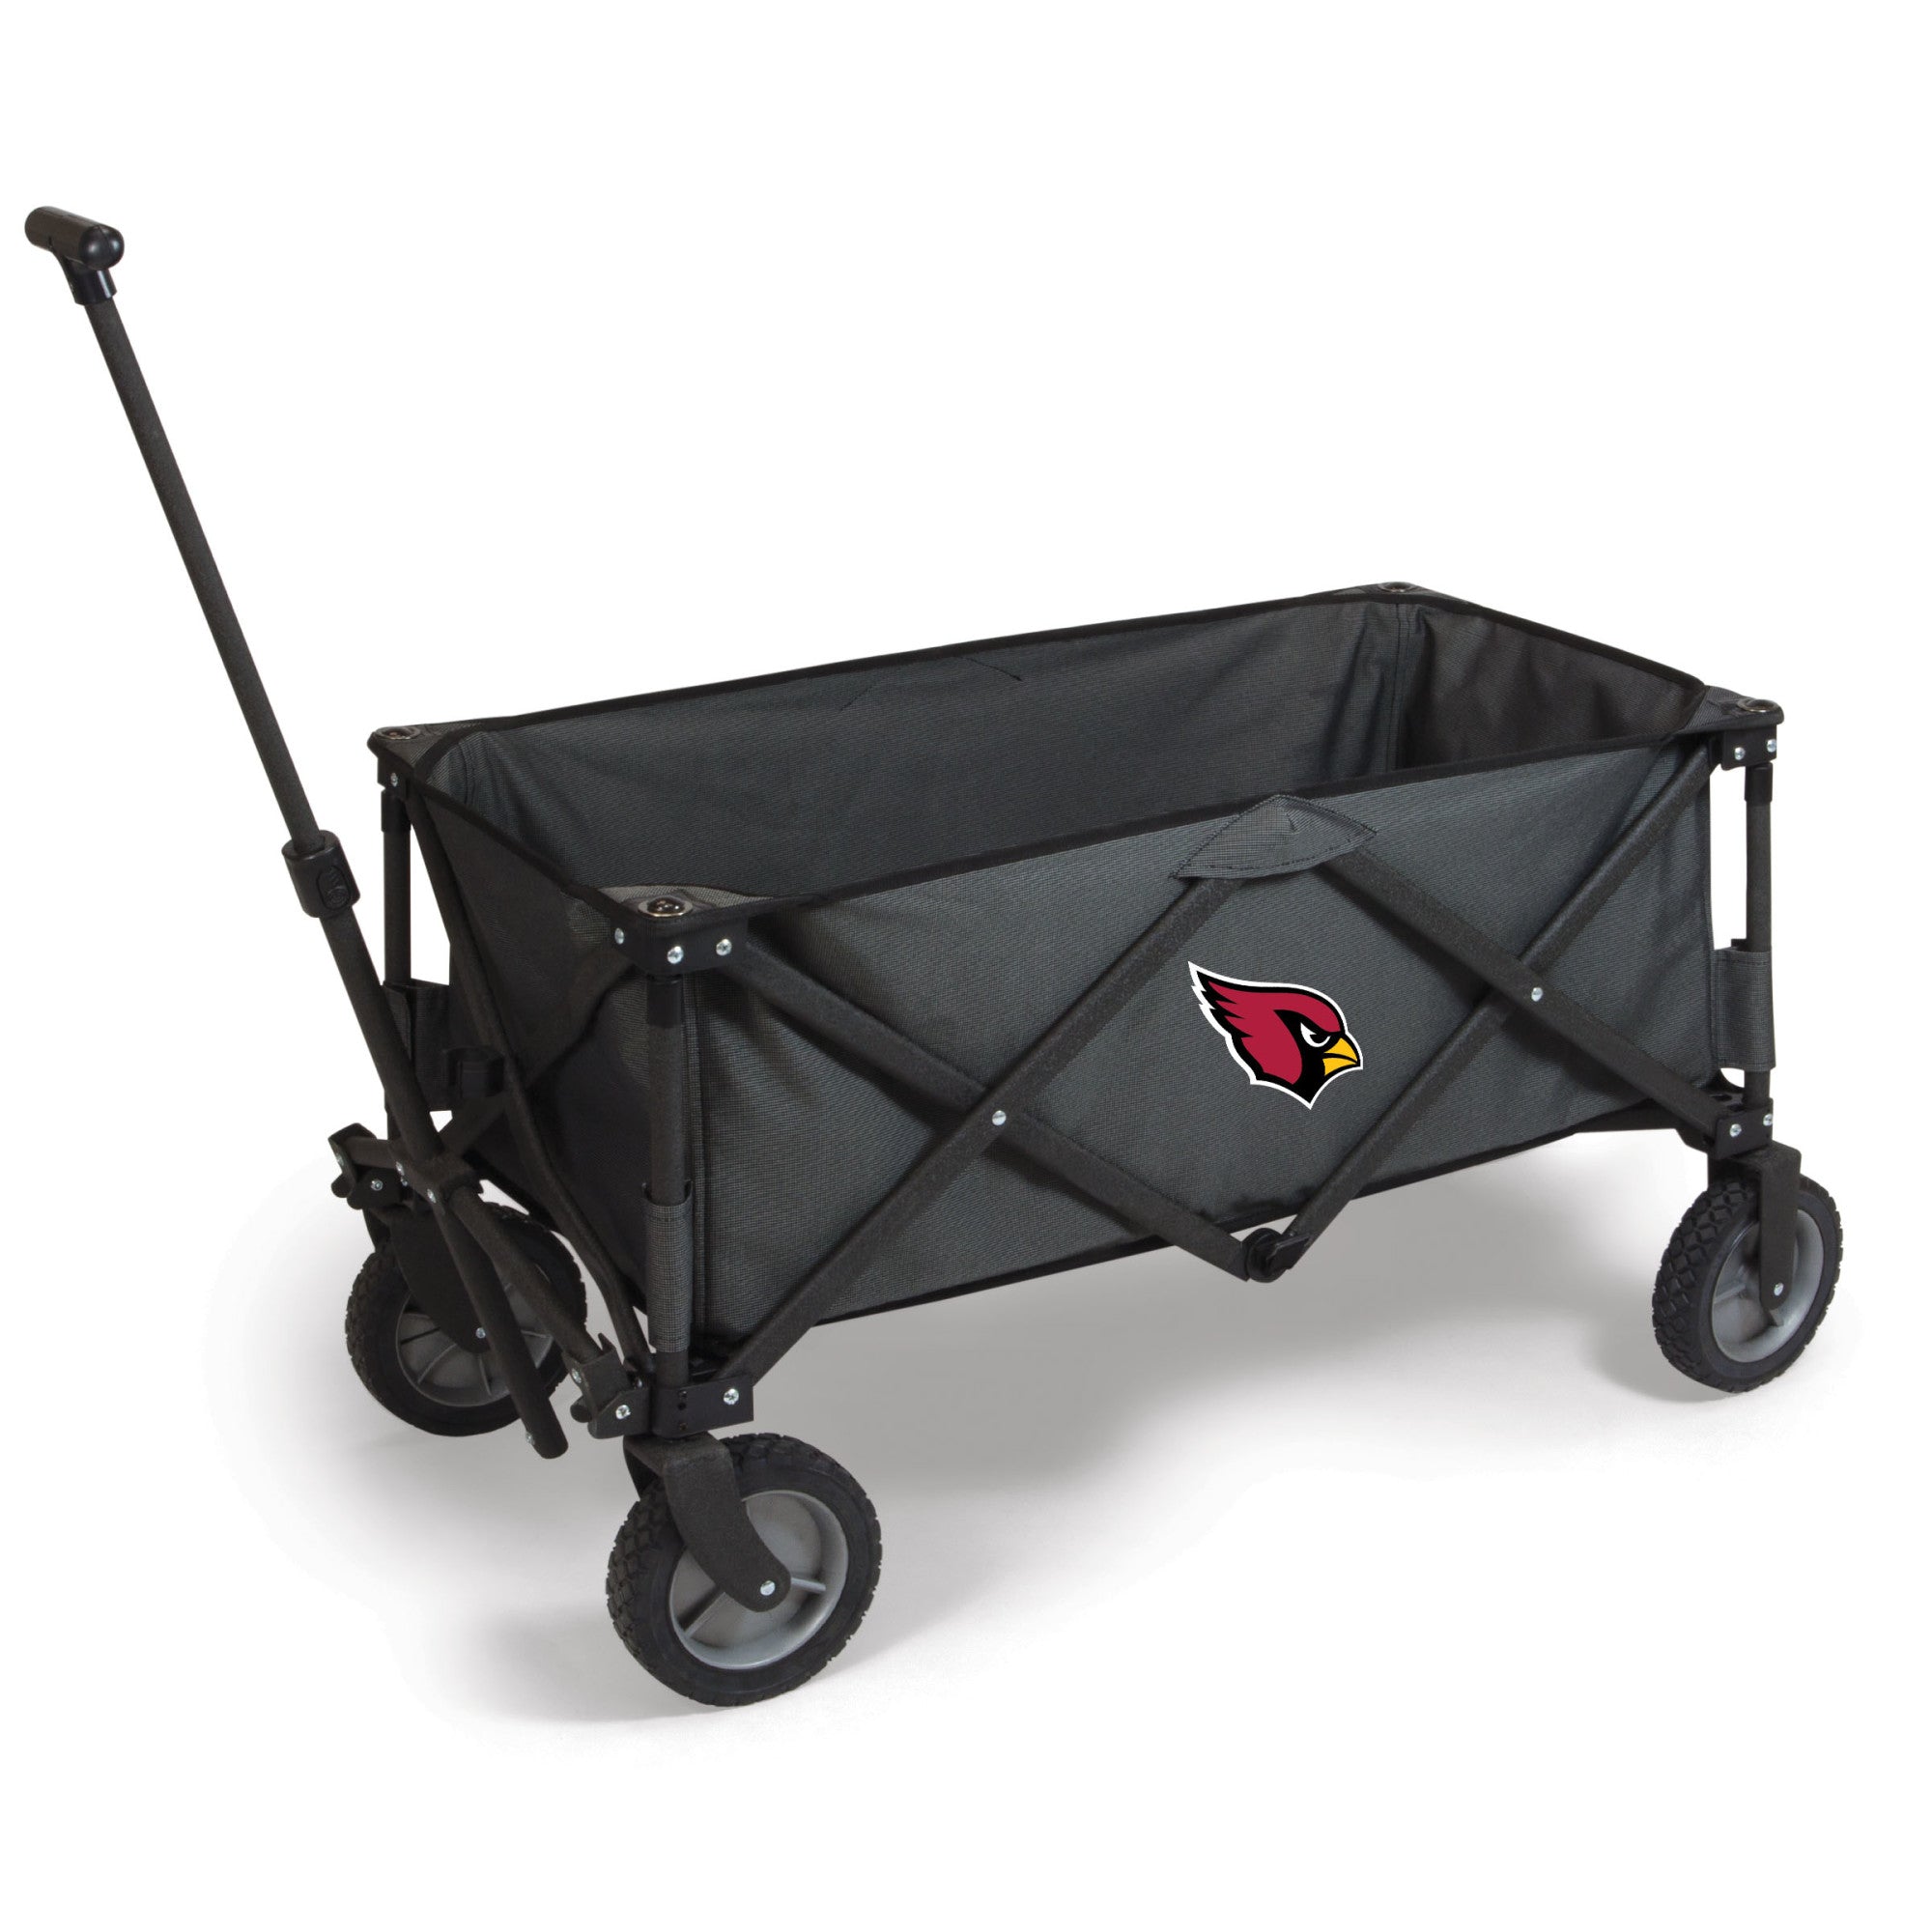 Picnic Time - Arizona cardinals - adventure wagon portable utility wagon, (dark gray)